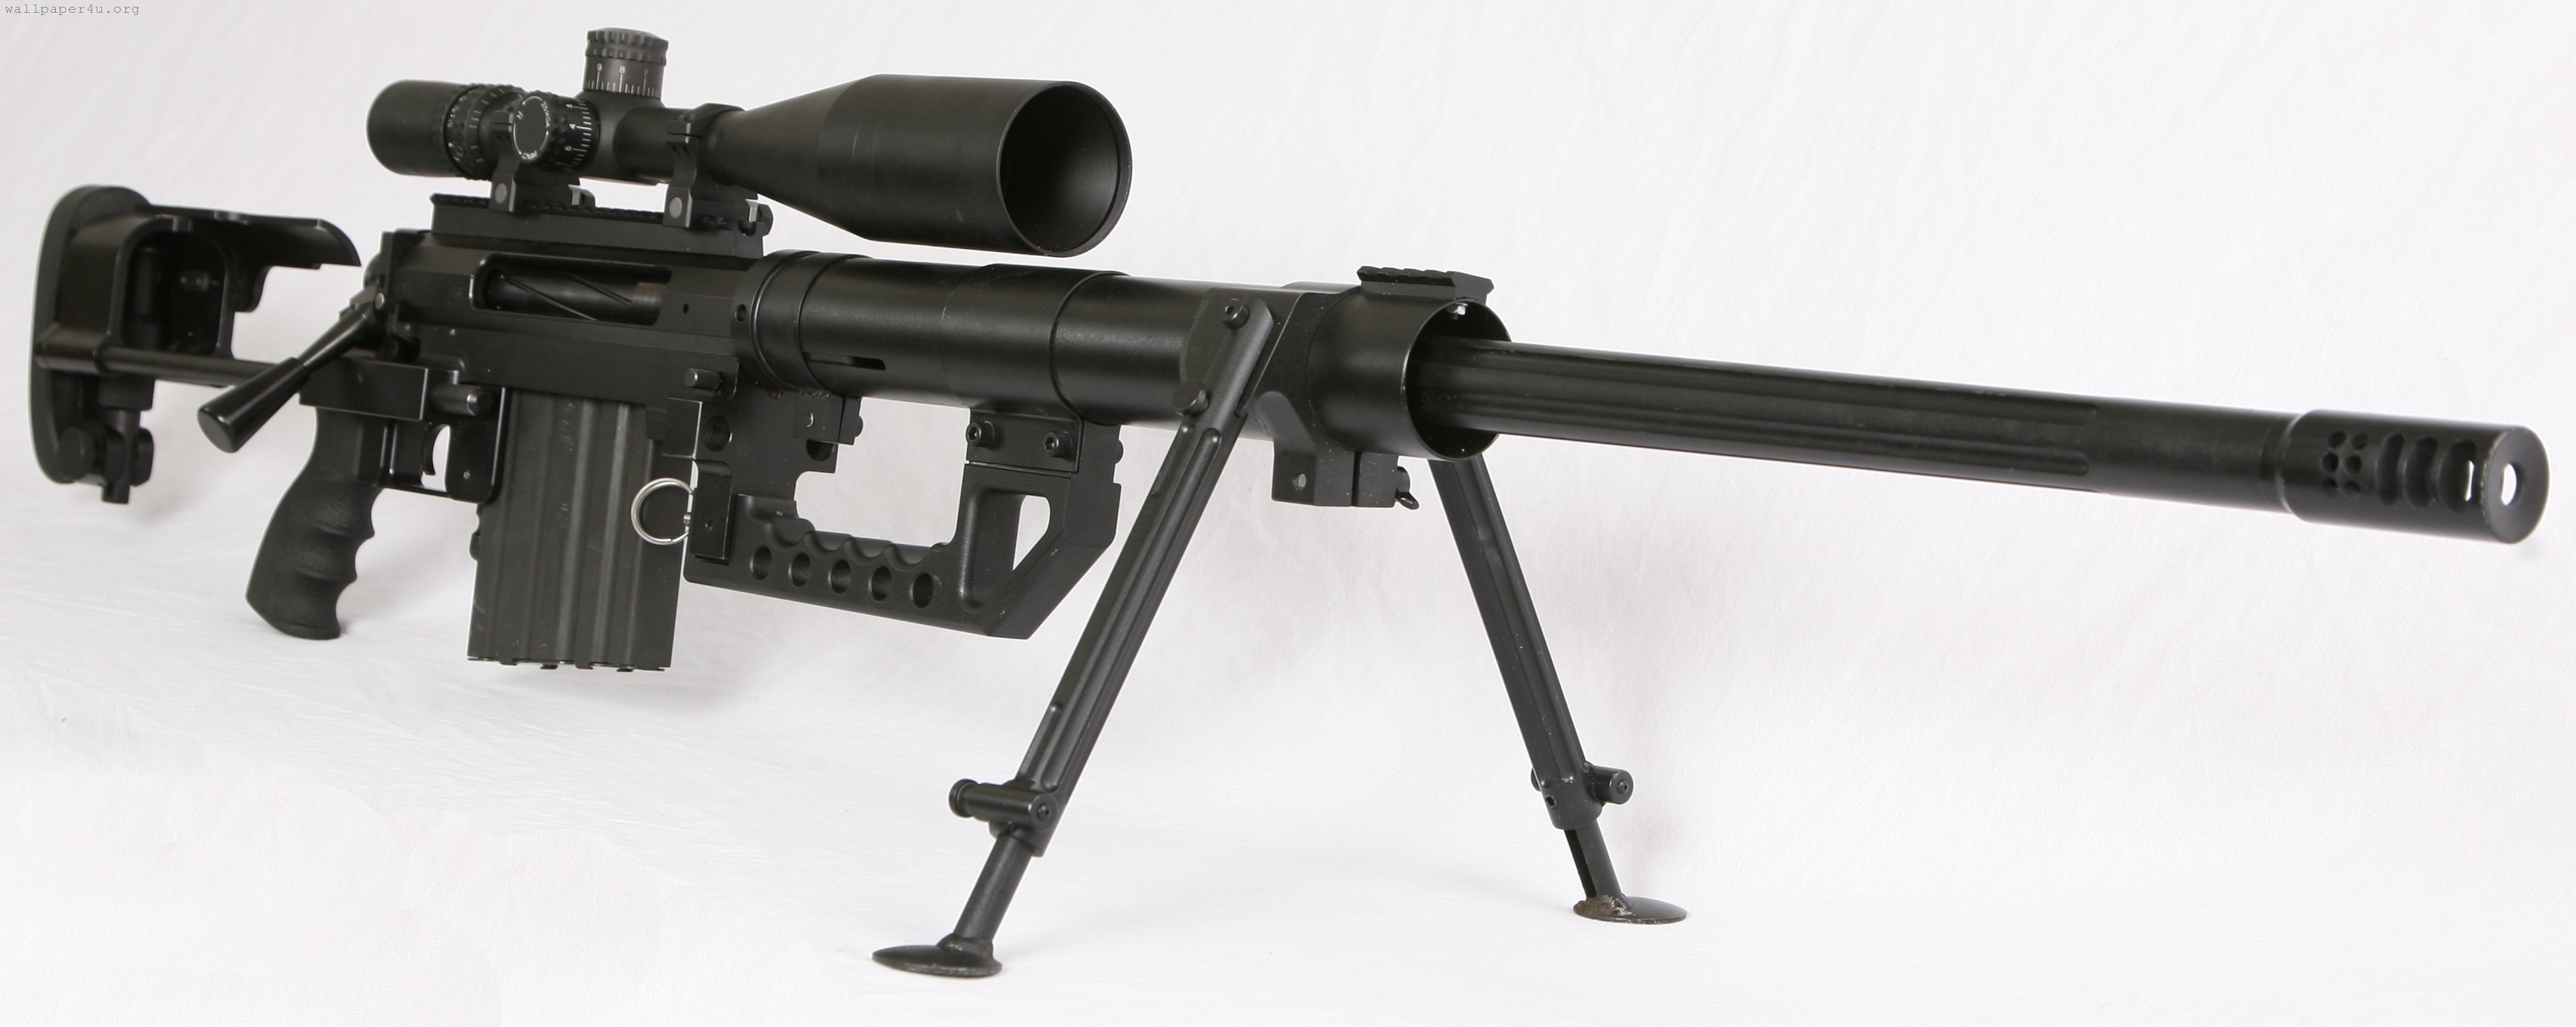 3413x1361 Weapons - Cheytac M200 Intervention Sniper Rifle Wallpaper